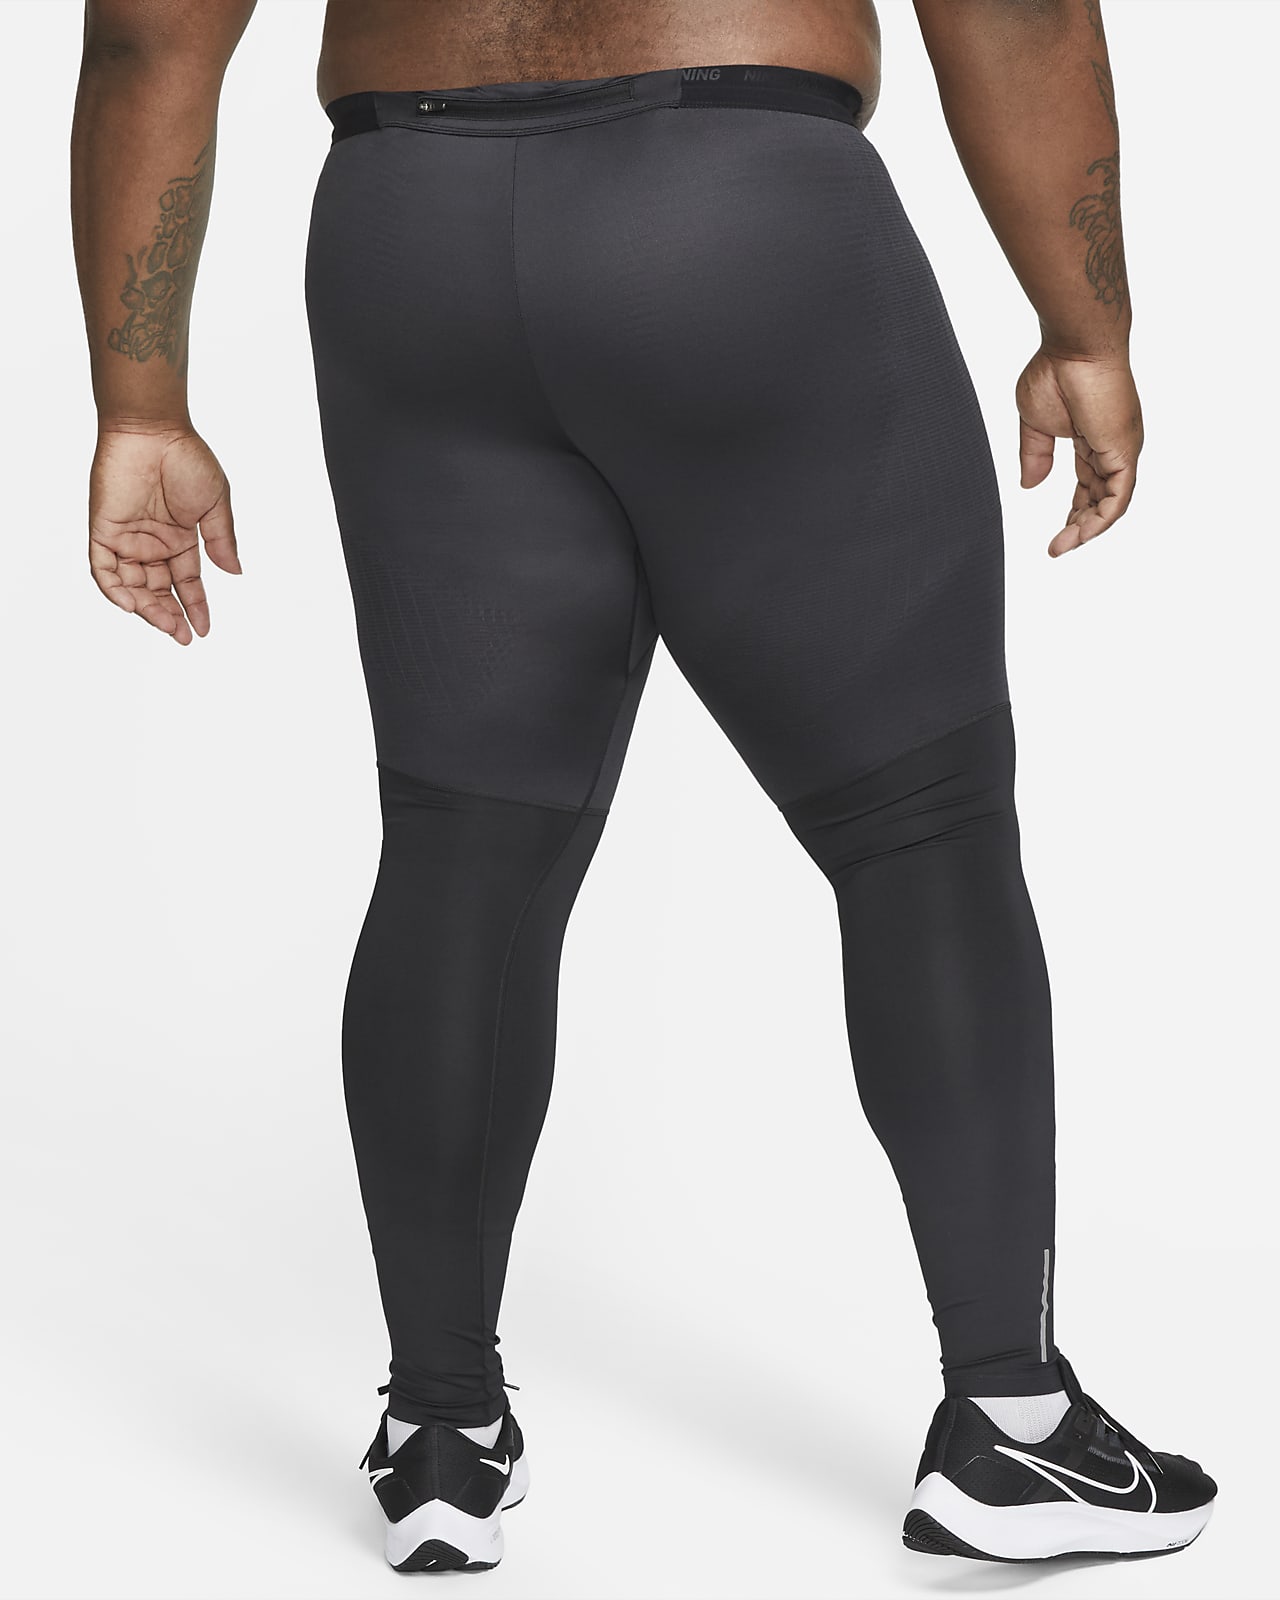 Nike Dri Fit Element Thermal Running Tights Black 380815-010 Men's Medium